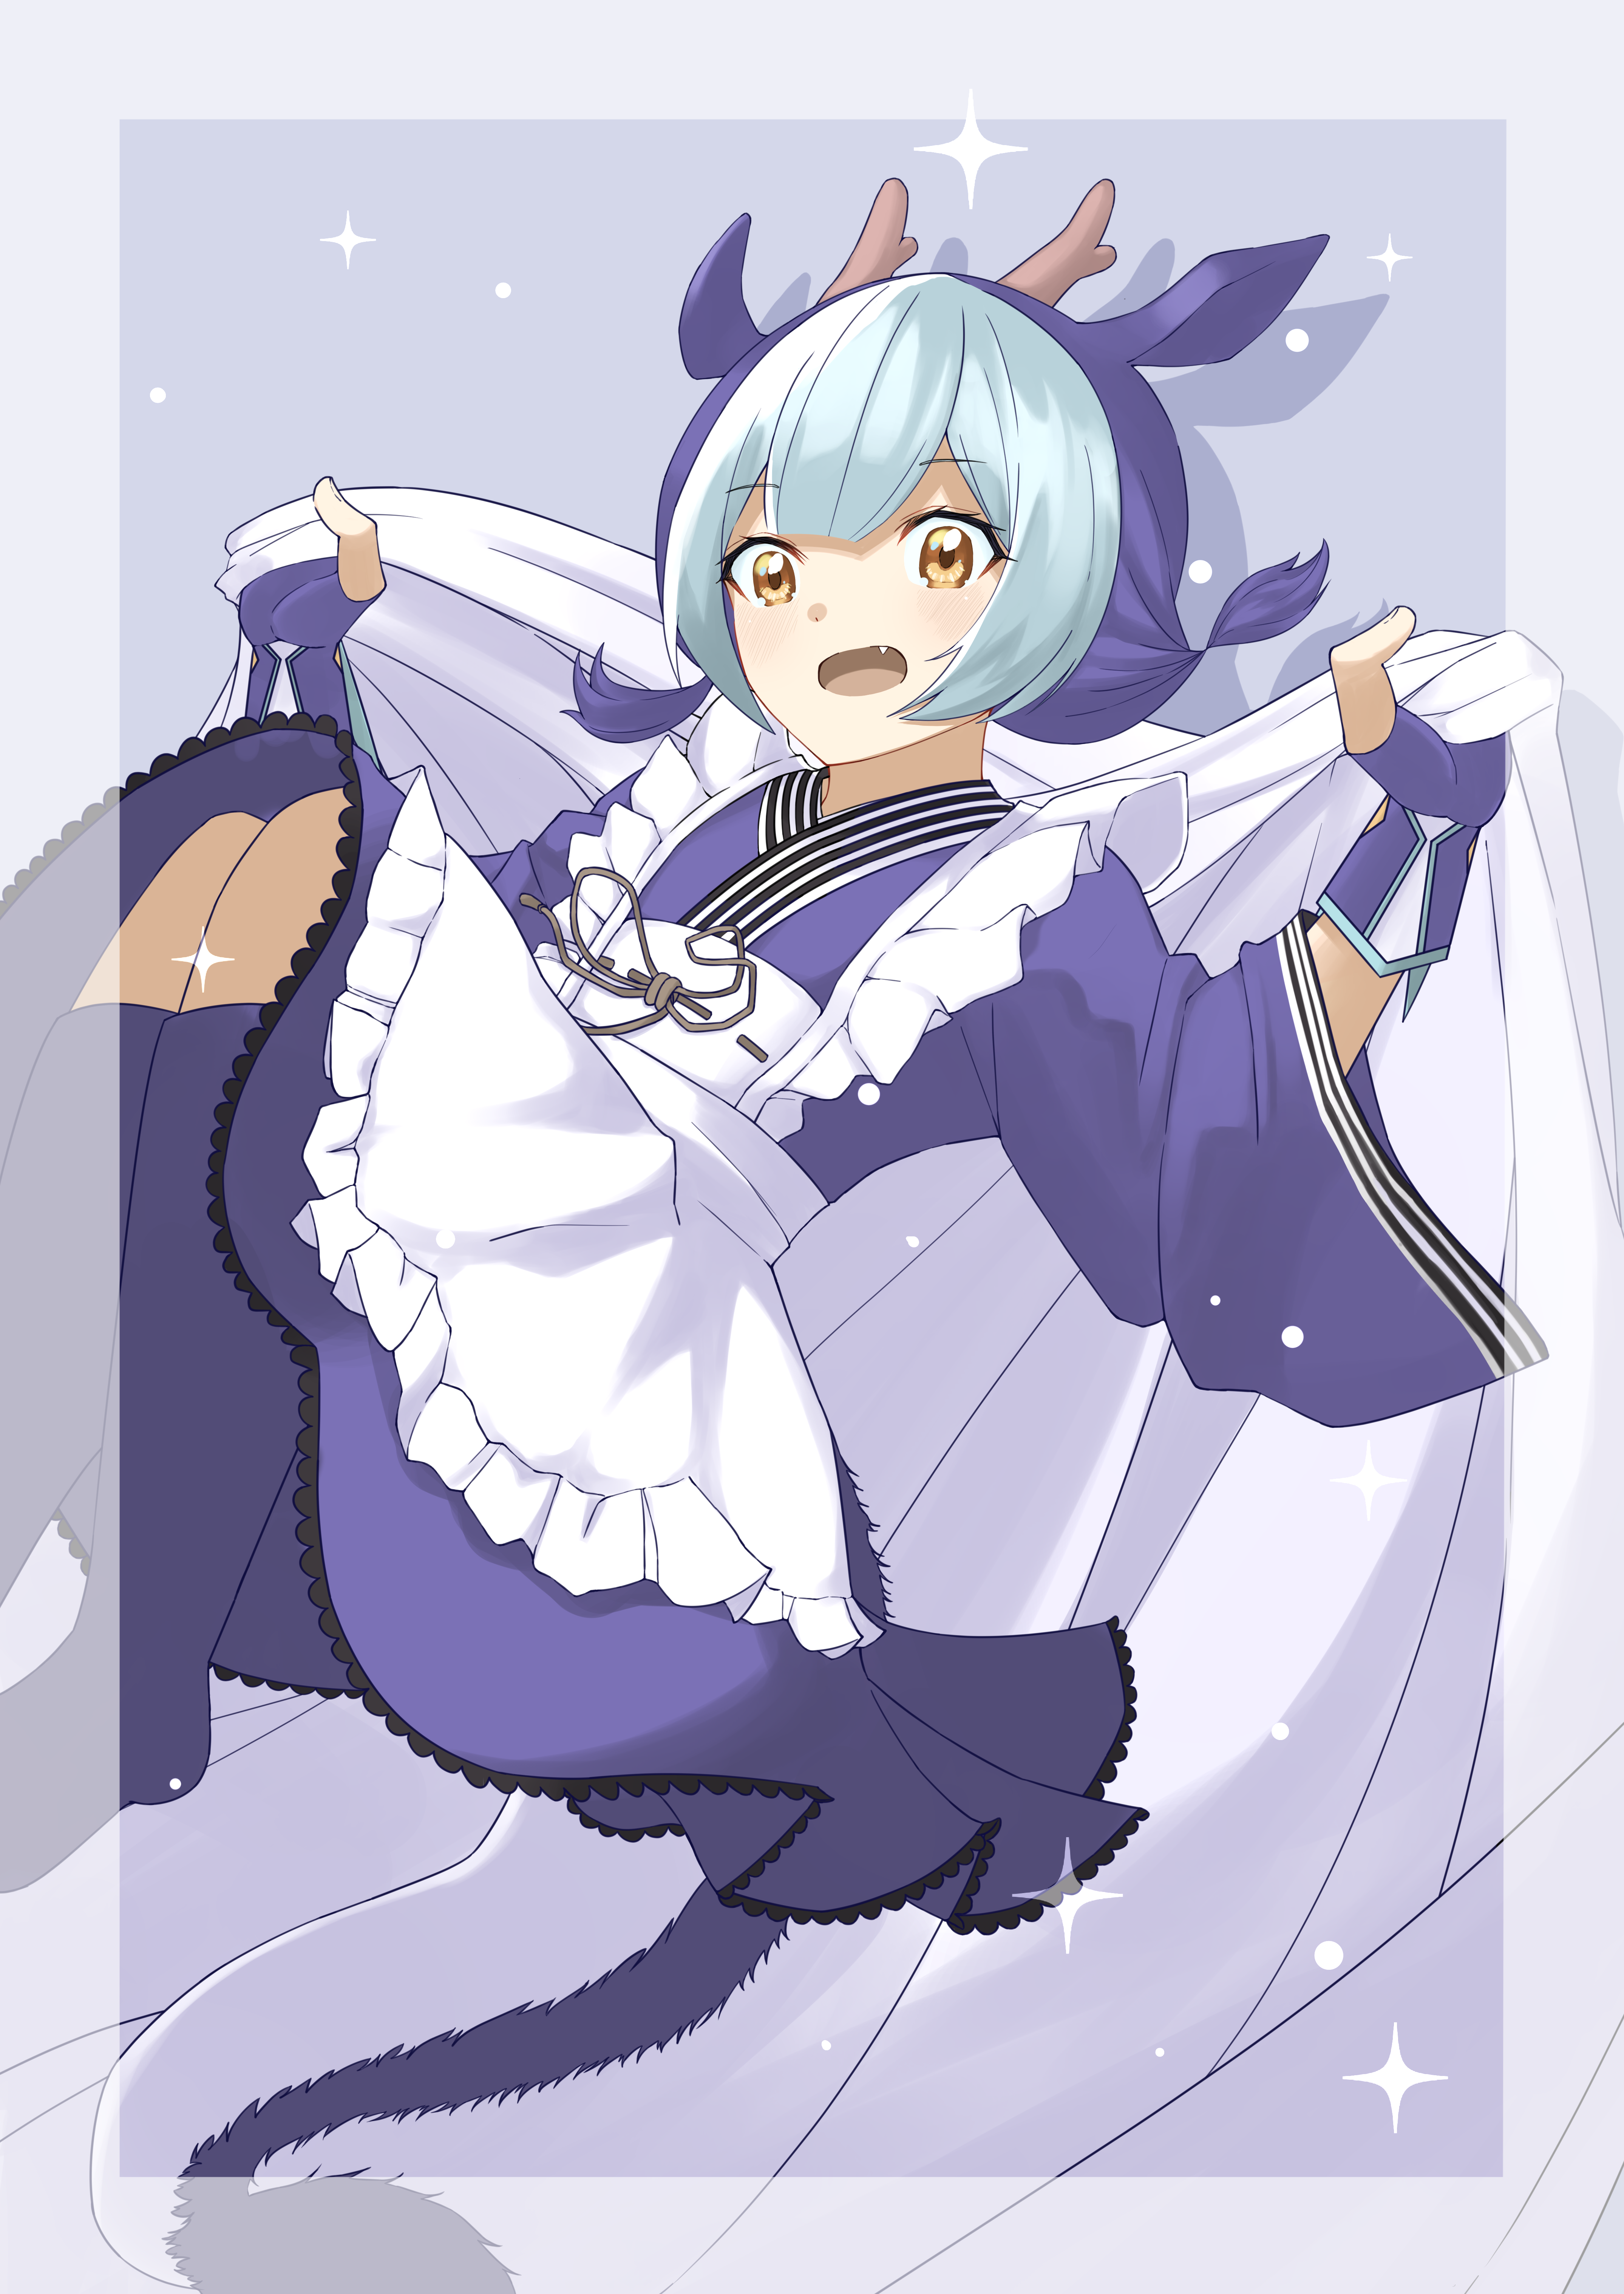 Anime 4299x6071 anime anime girls Trading Card Games Yu-Gi-Oh! Laundry Dragonmaid blue hair maid maid outfit artwork digital art fan art